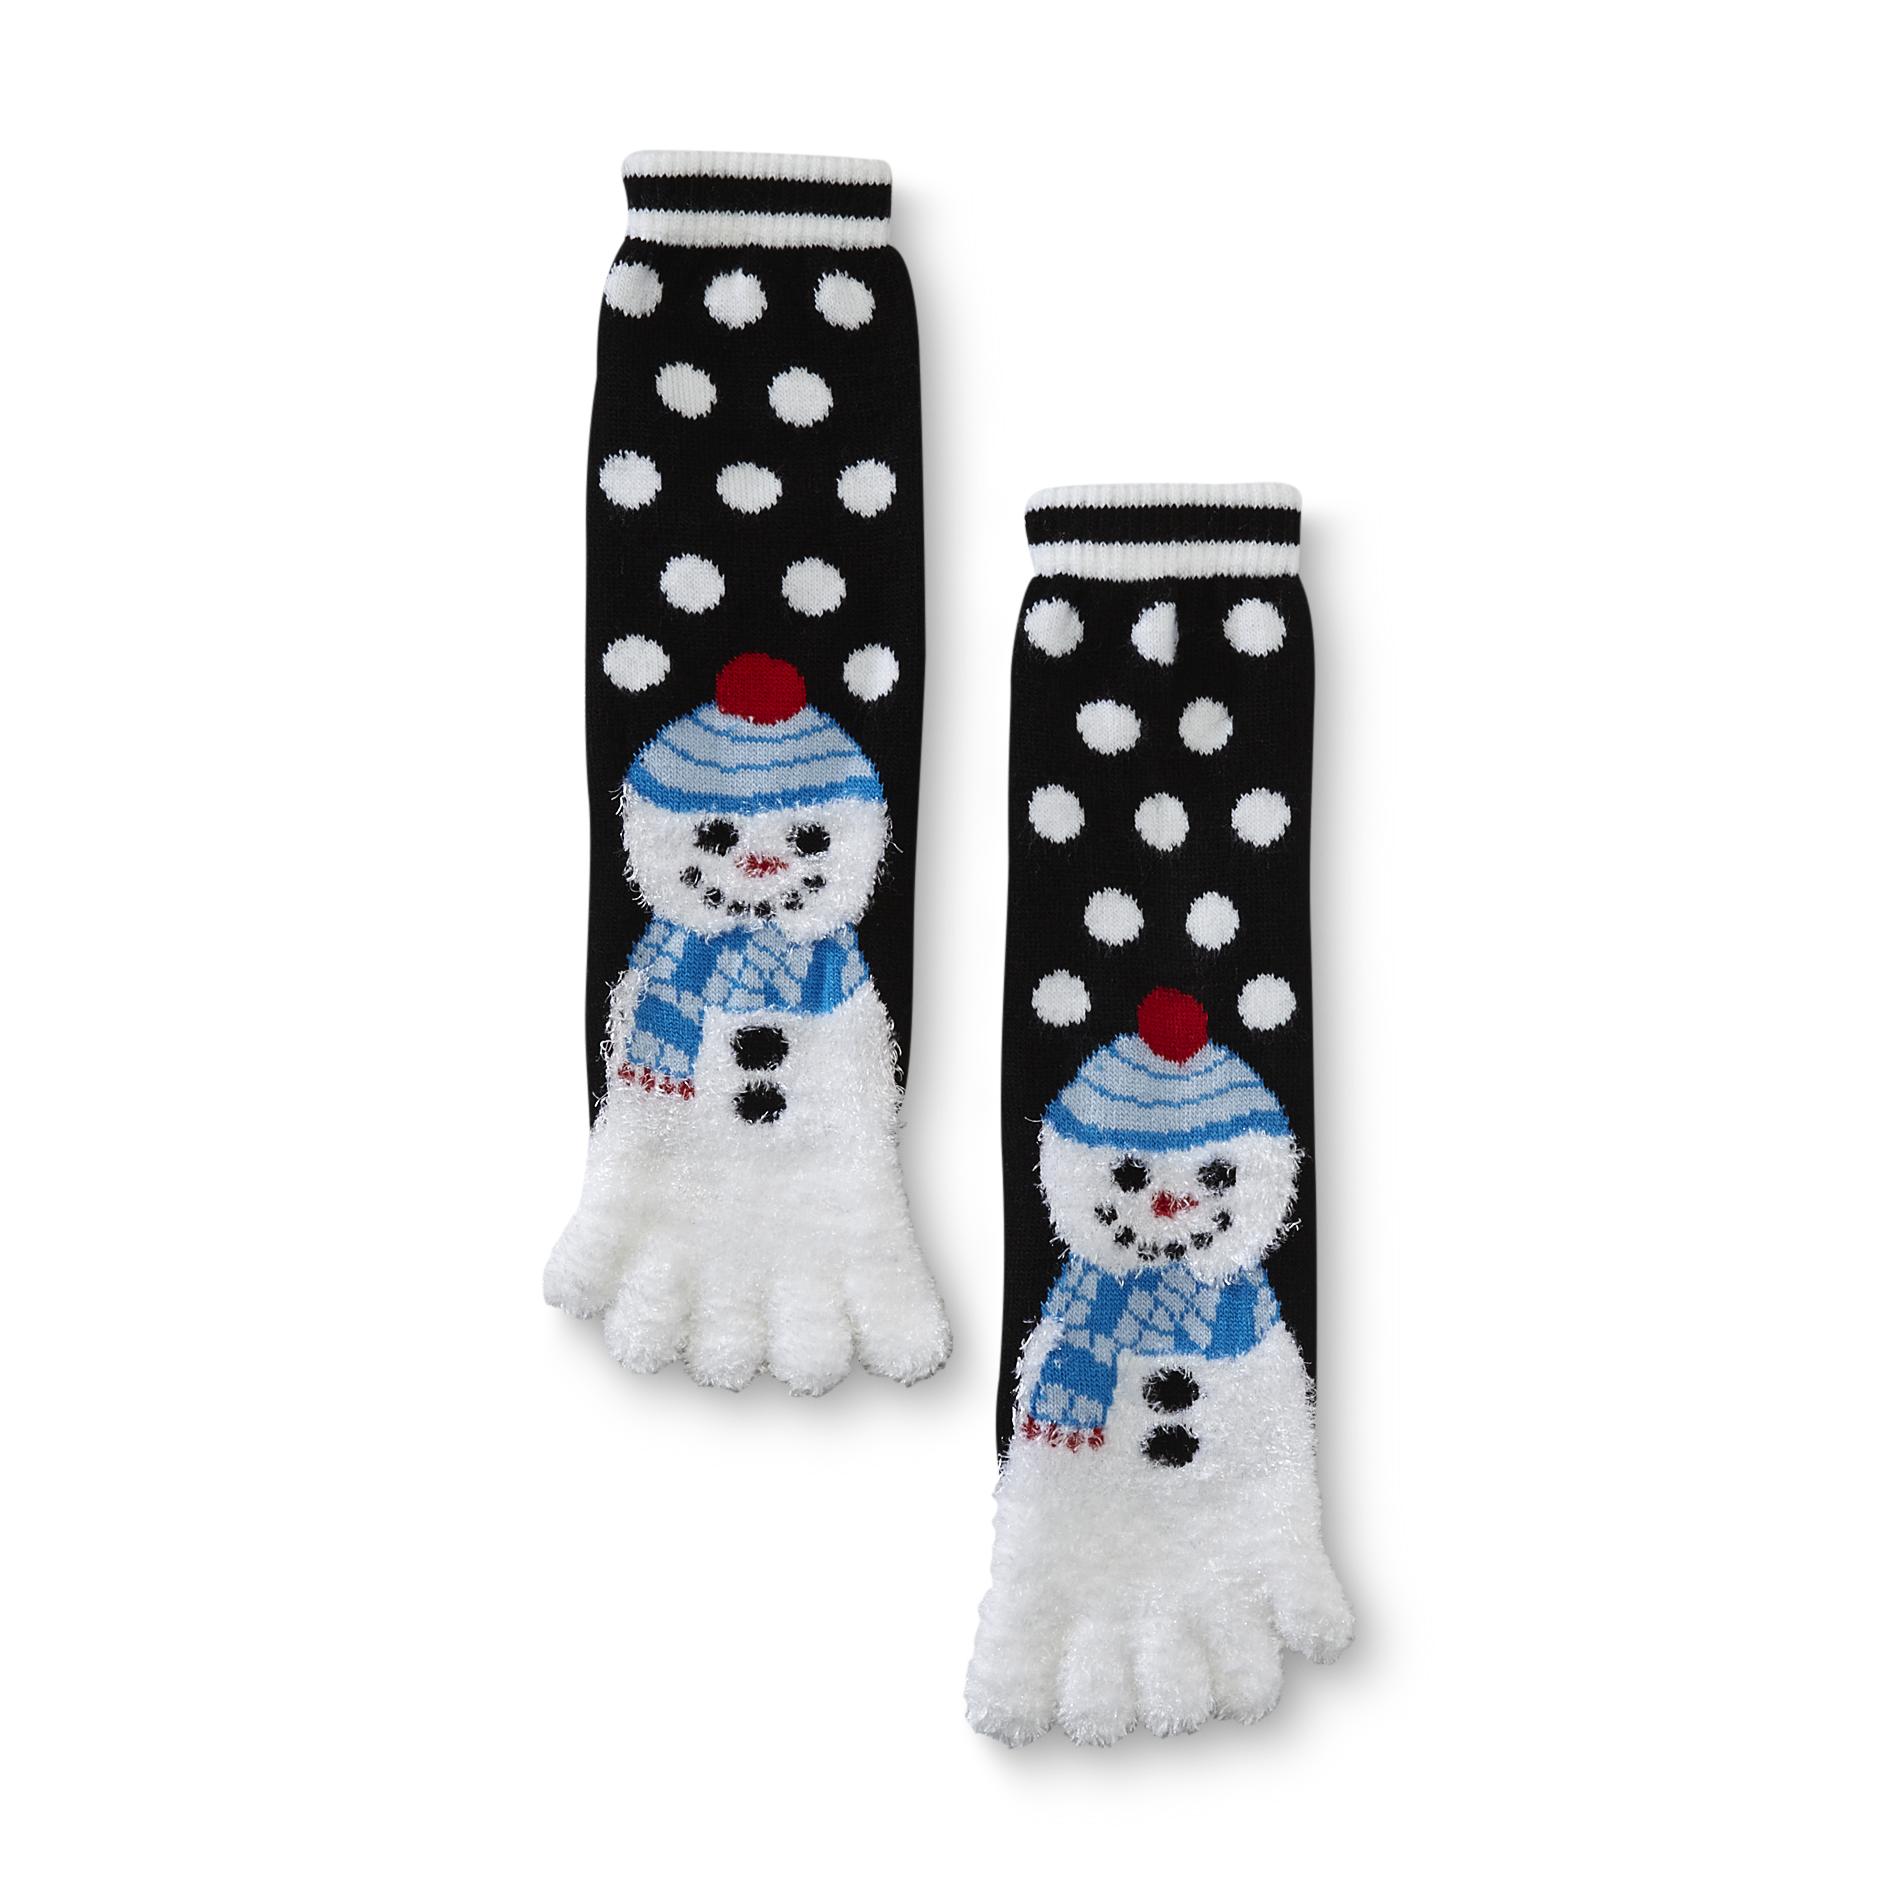 Joe Boxer Women's Holiday Toe Socks - Snowman